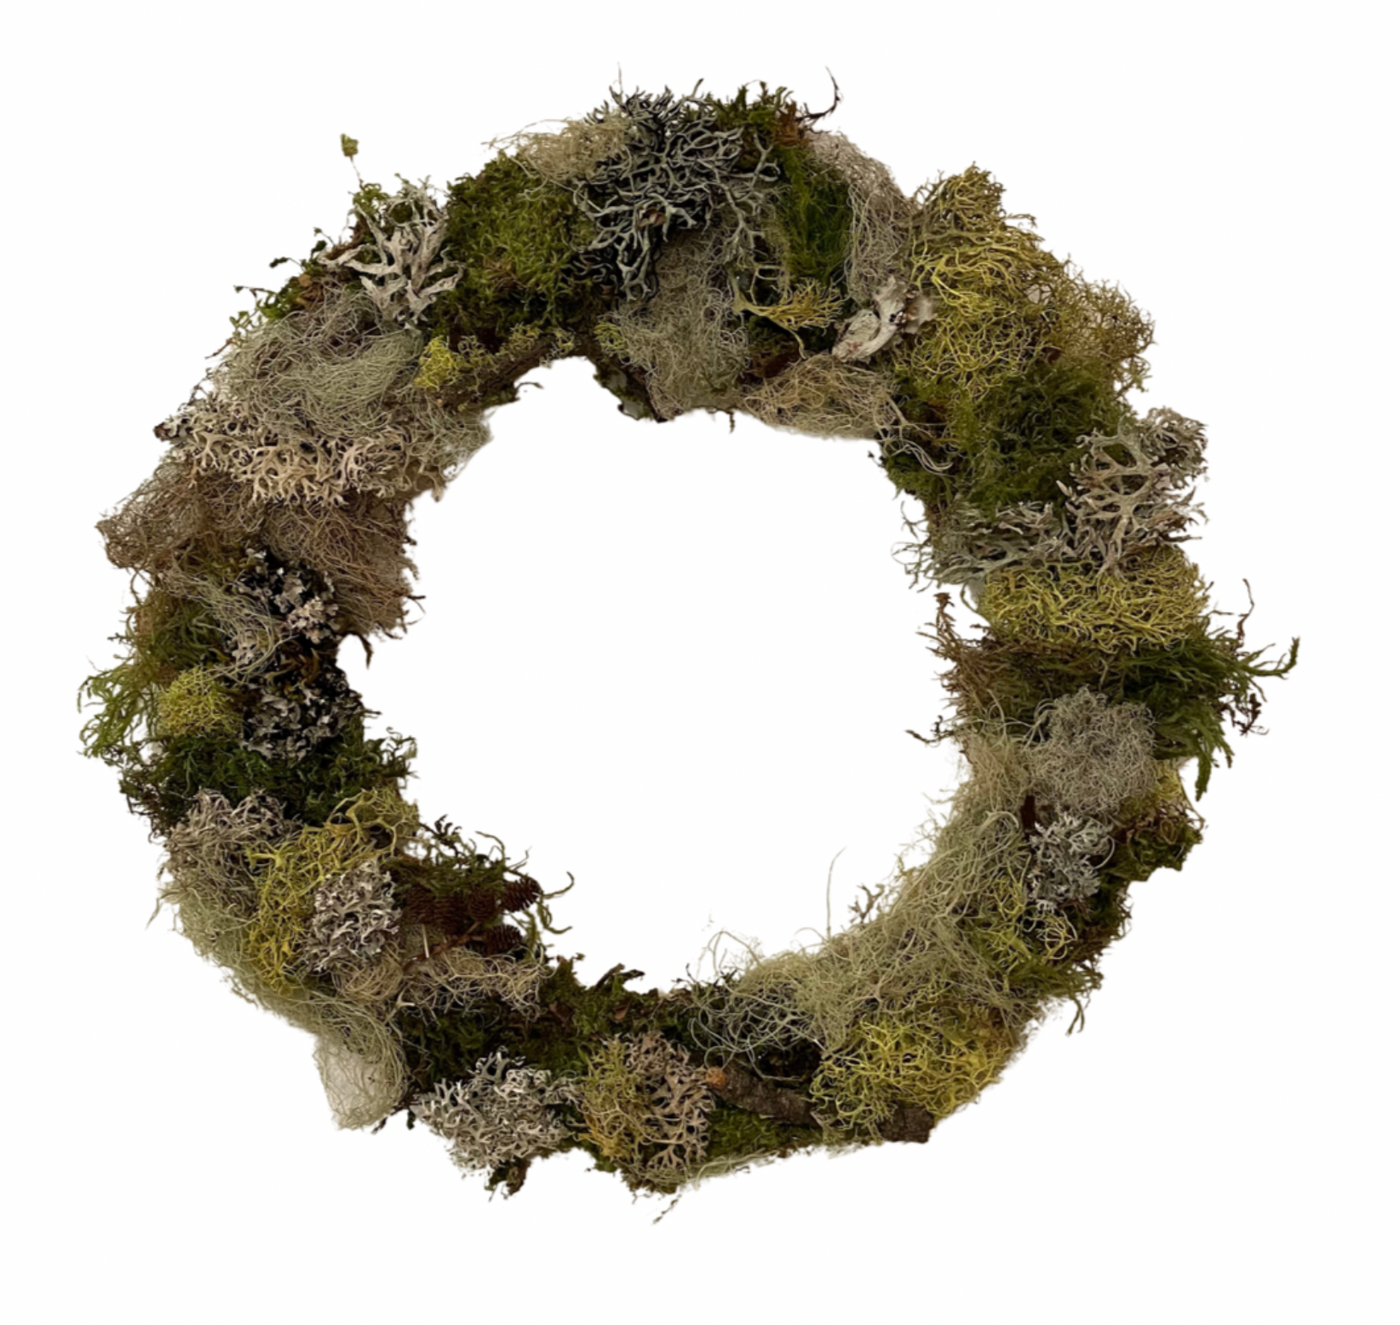 Moss and Lichen Wreath   Sunday Dec. 3 3-6pm at WEND